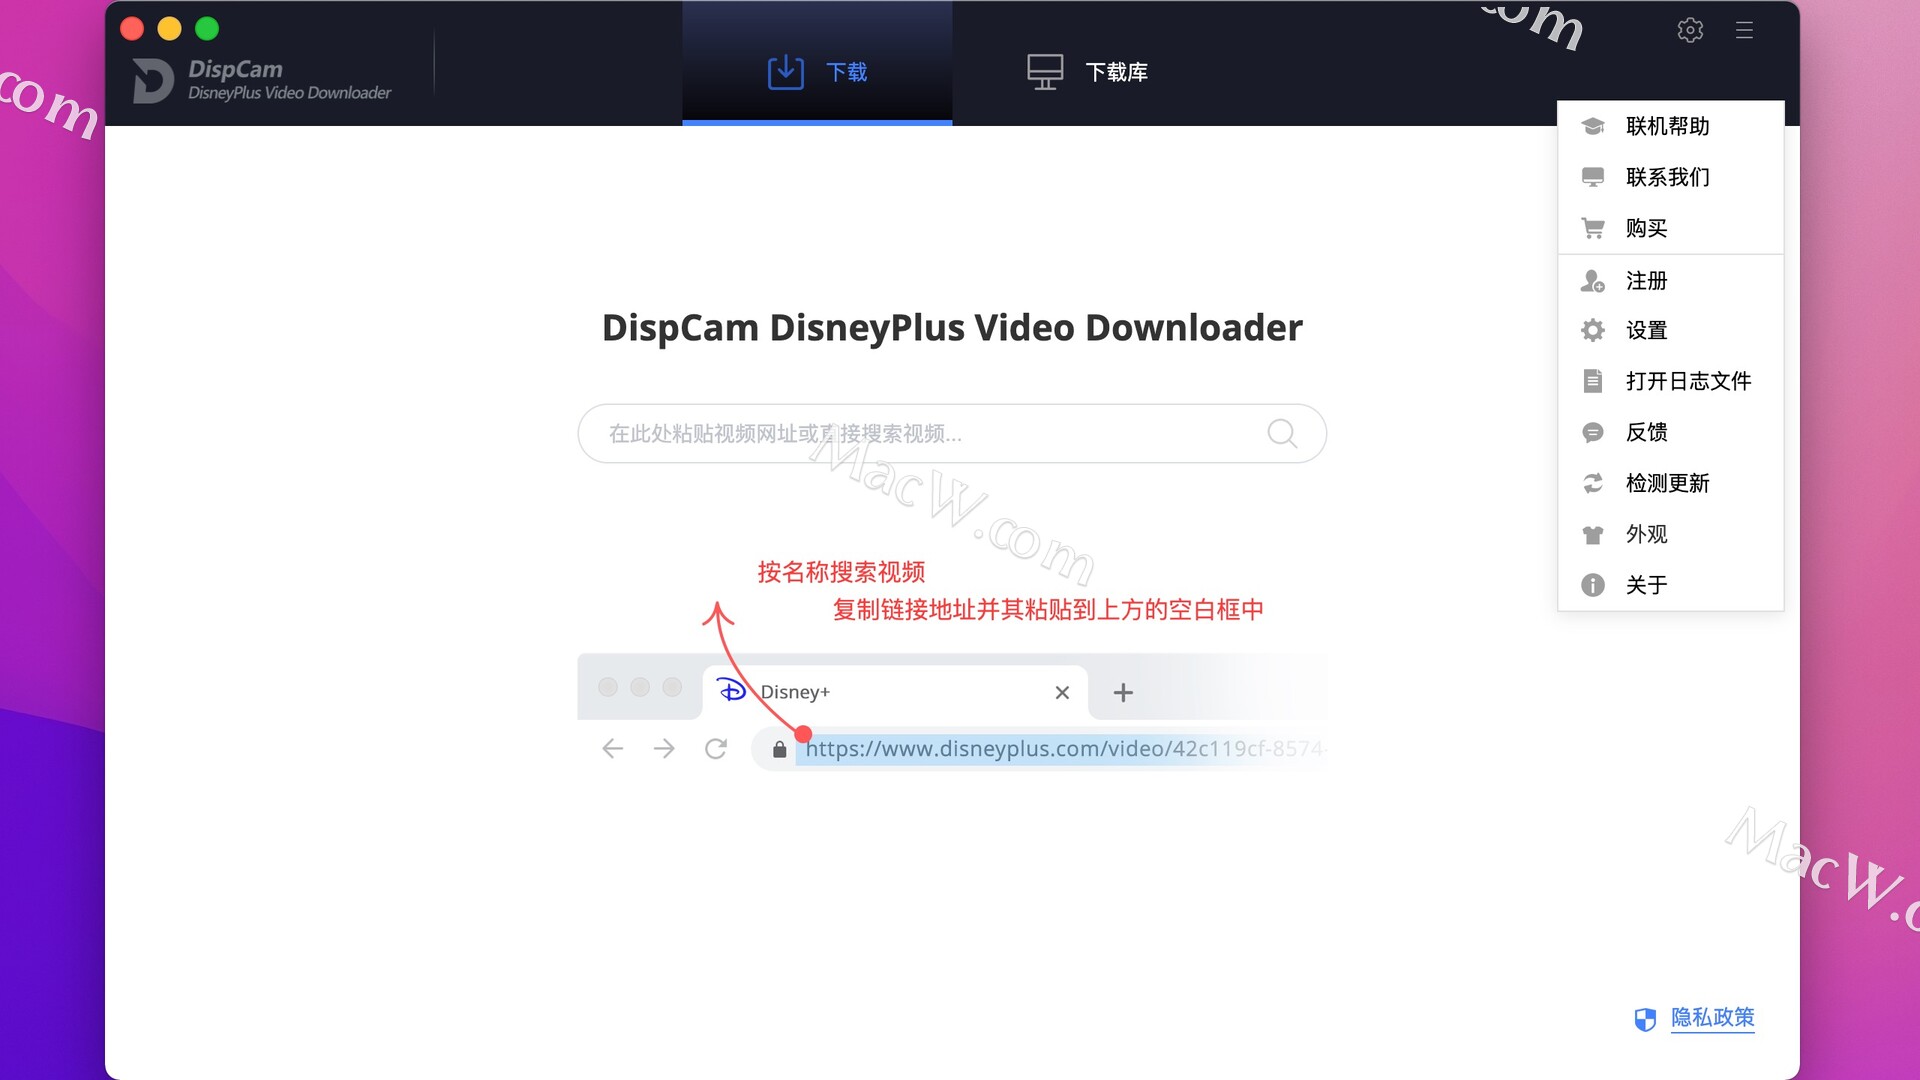 迪士尼视频下载器DispCam DisneyPlus Video Downloader 使用教程